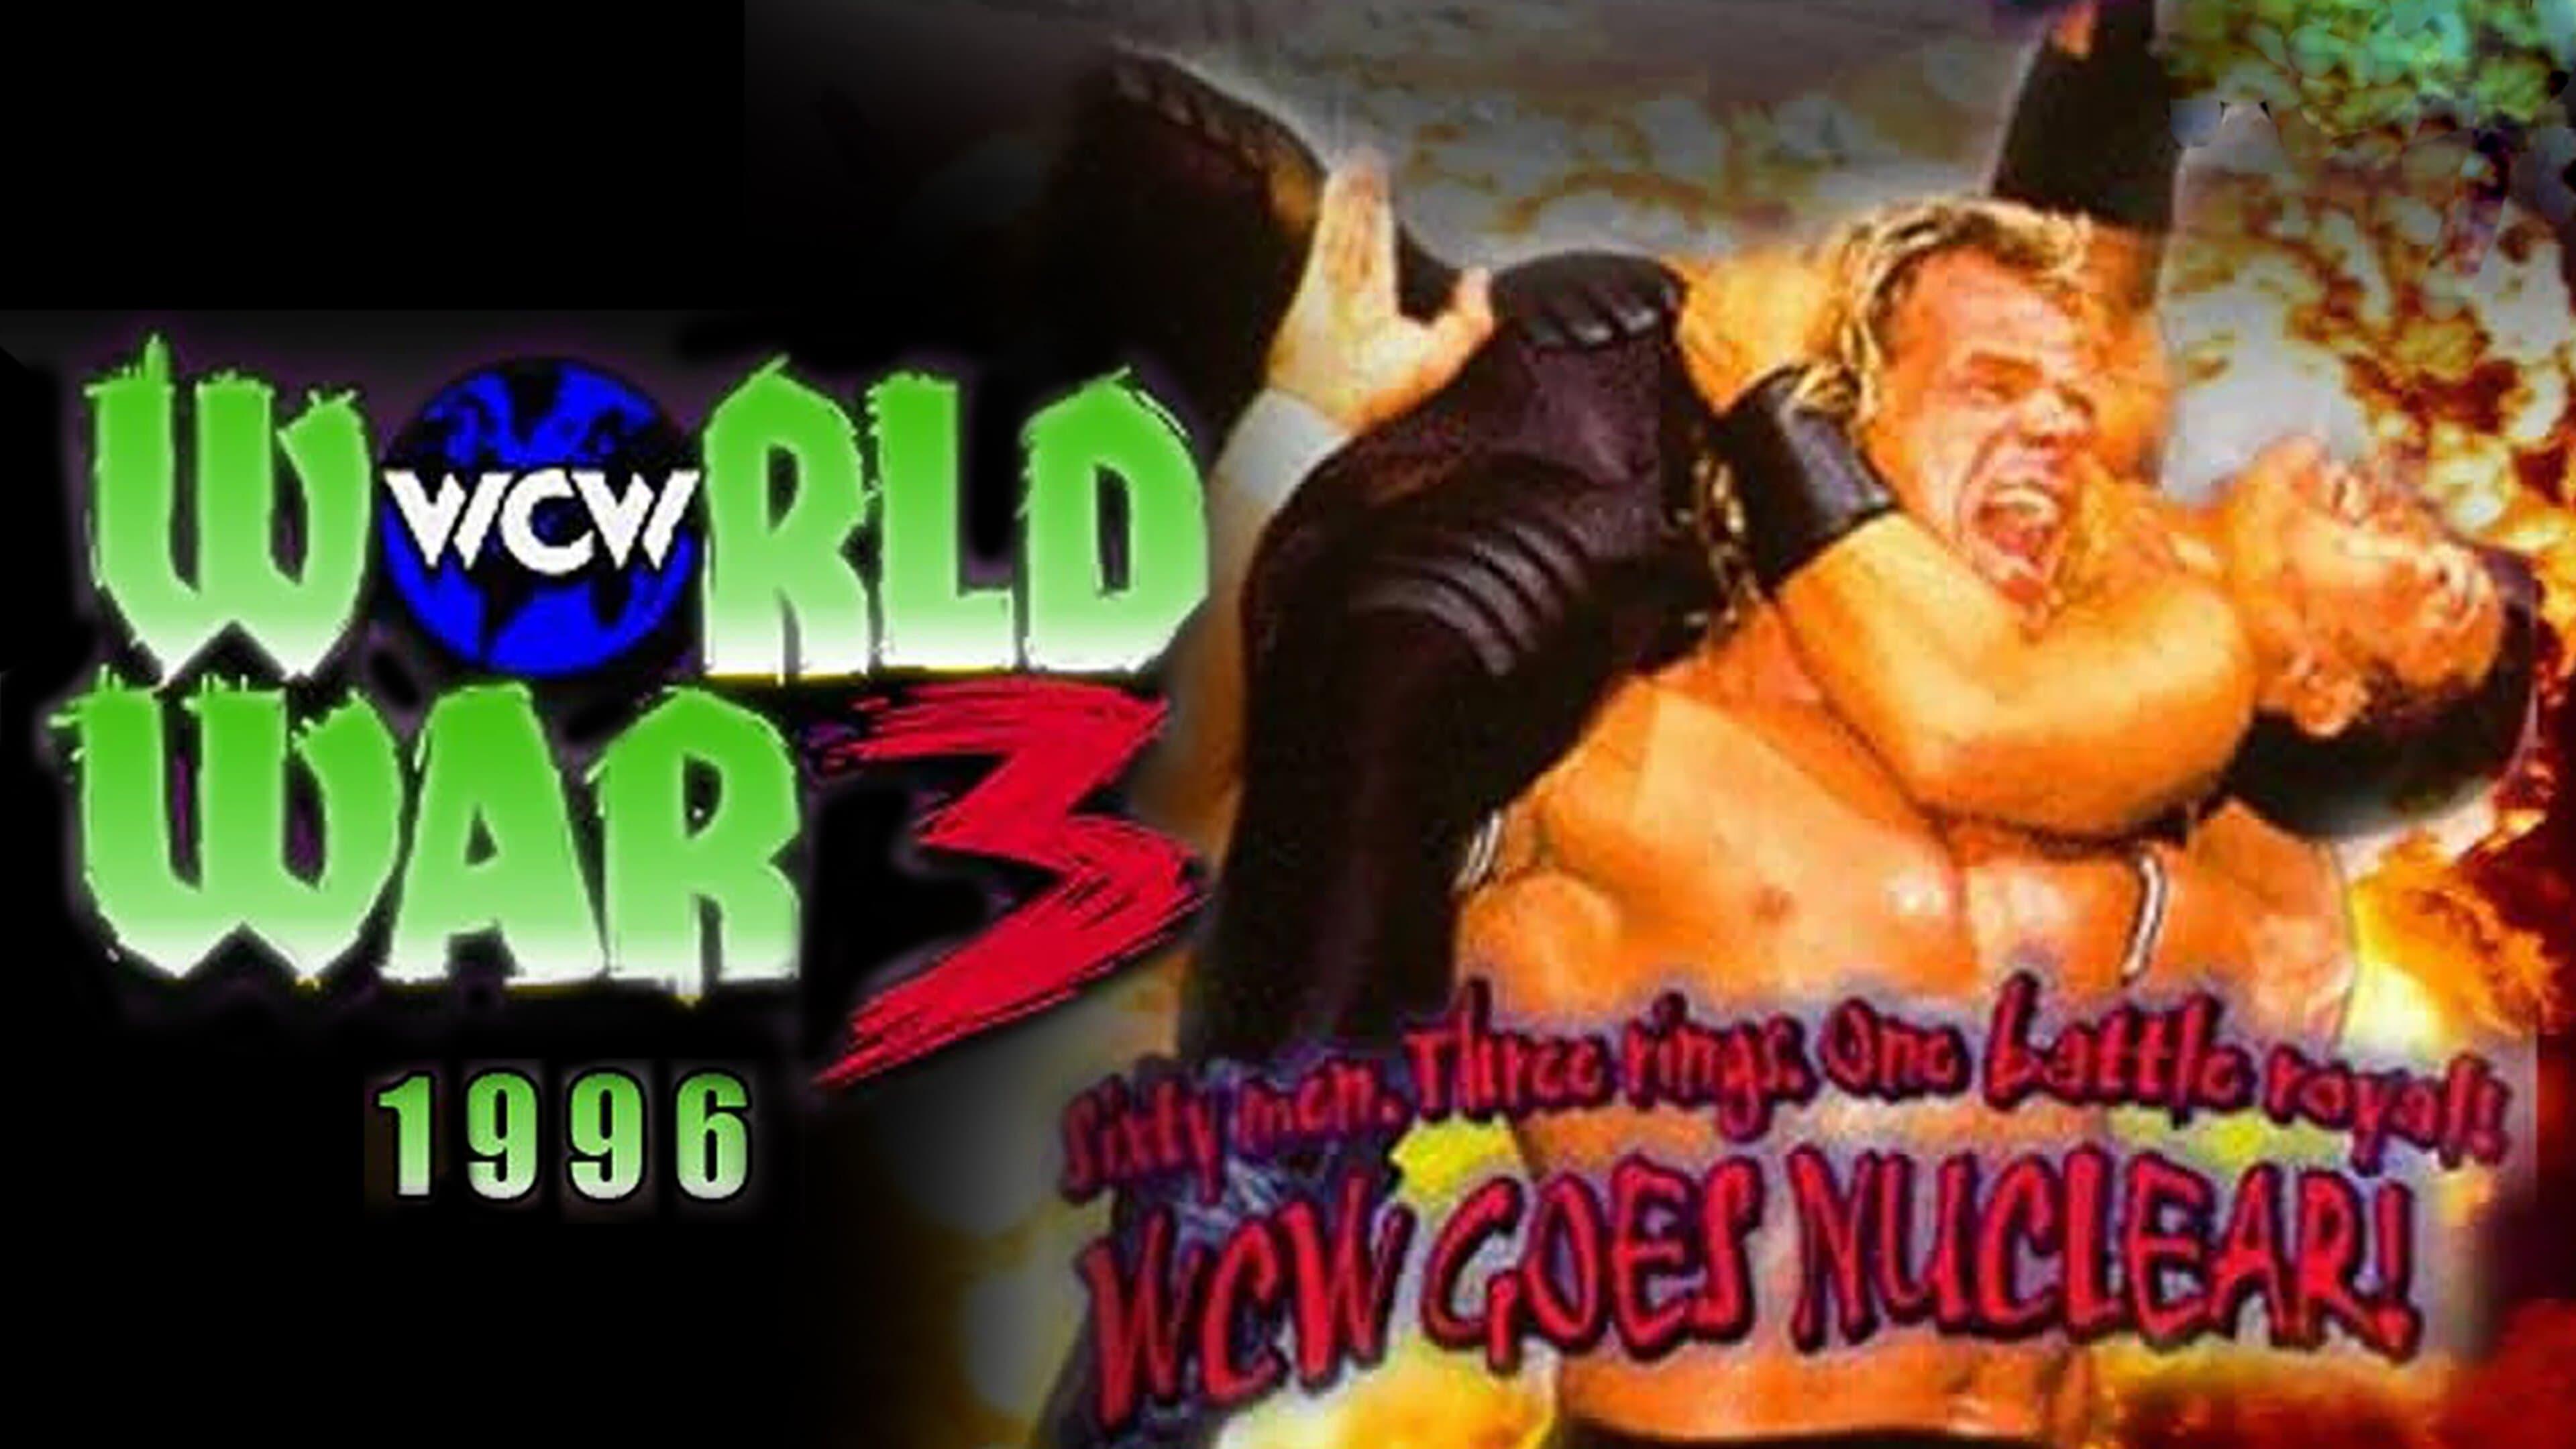 WCW World War 3 1996 backdrop